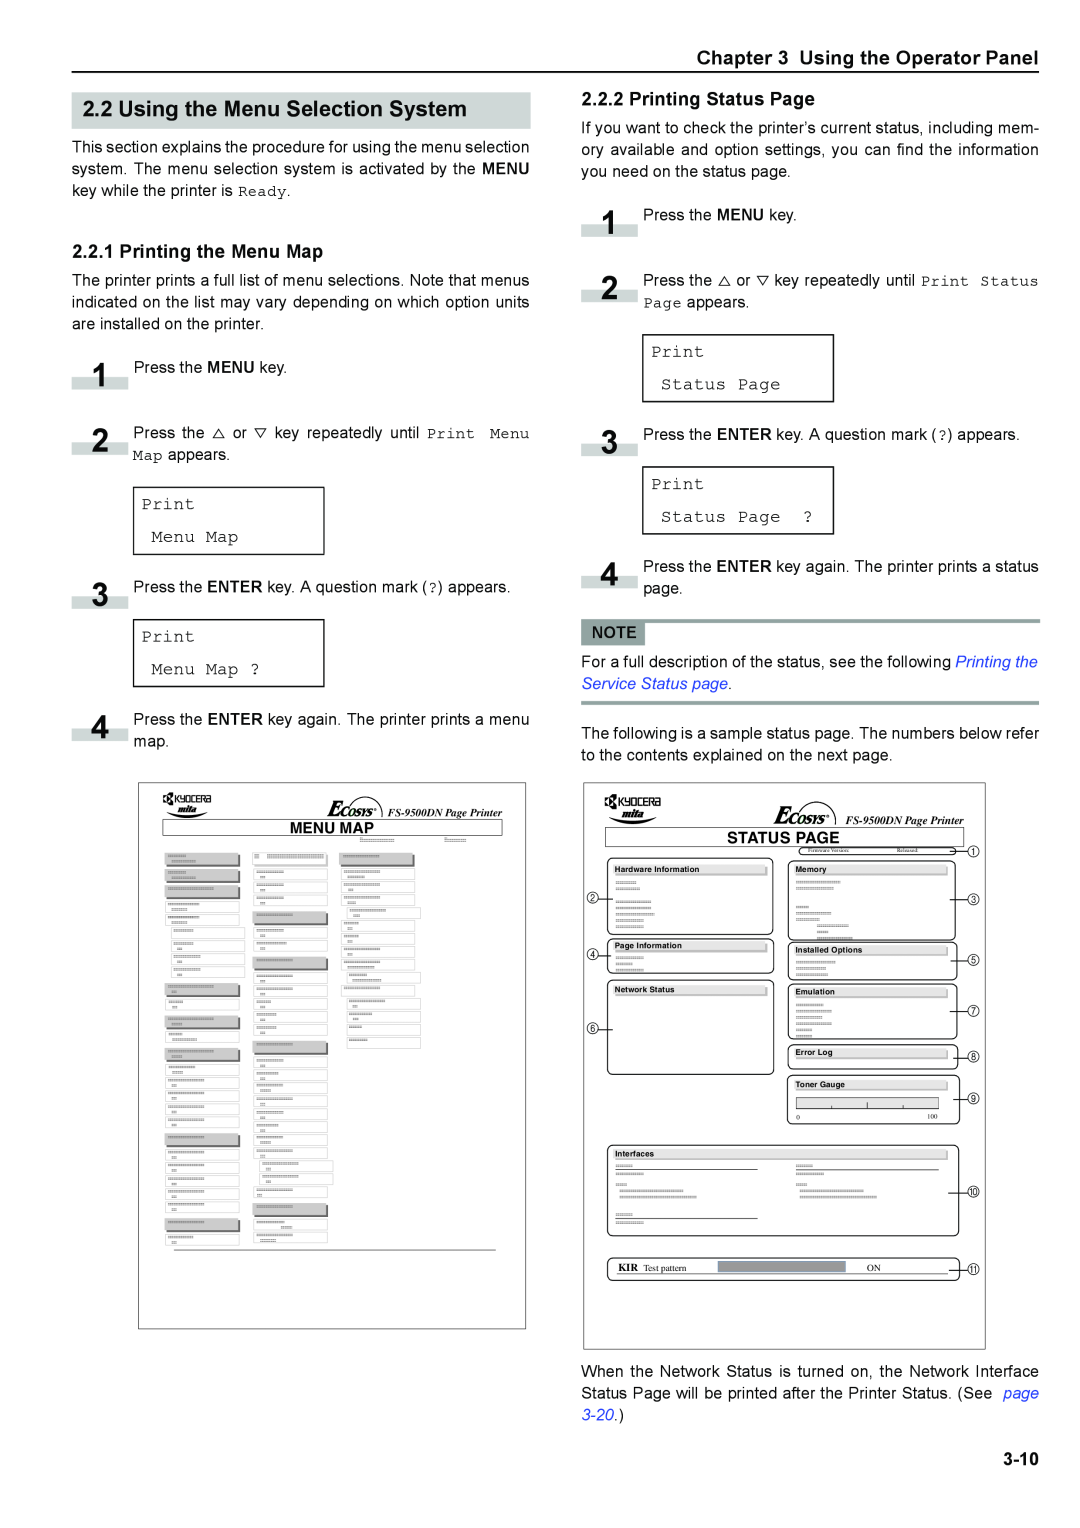 Kyocera S-9100DN manual Using the Operator Panel, Printing the Menu Map, Printing Status Page, 3-10 